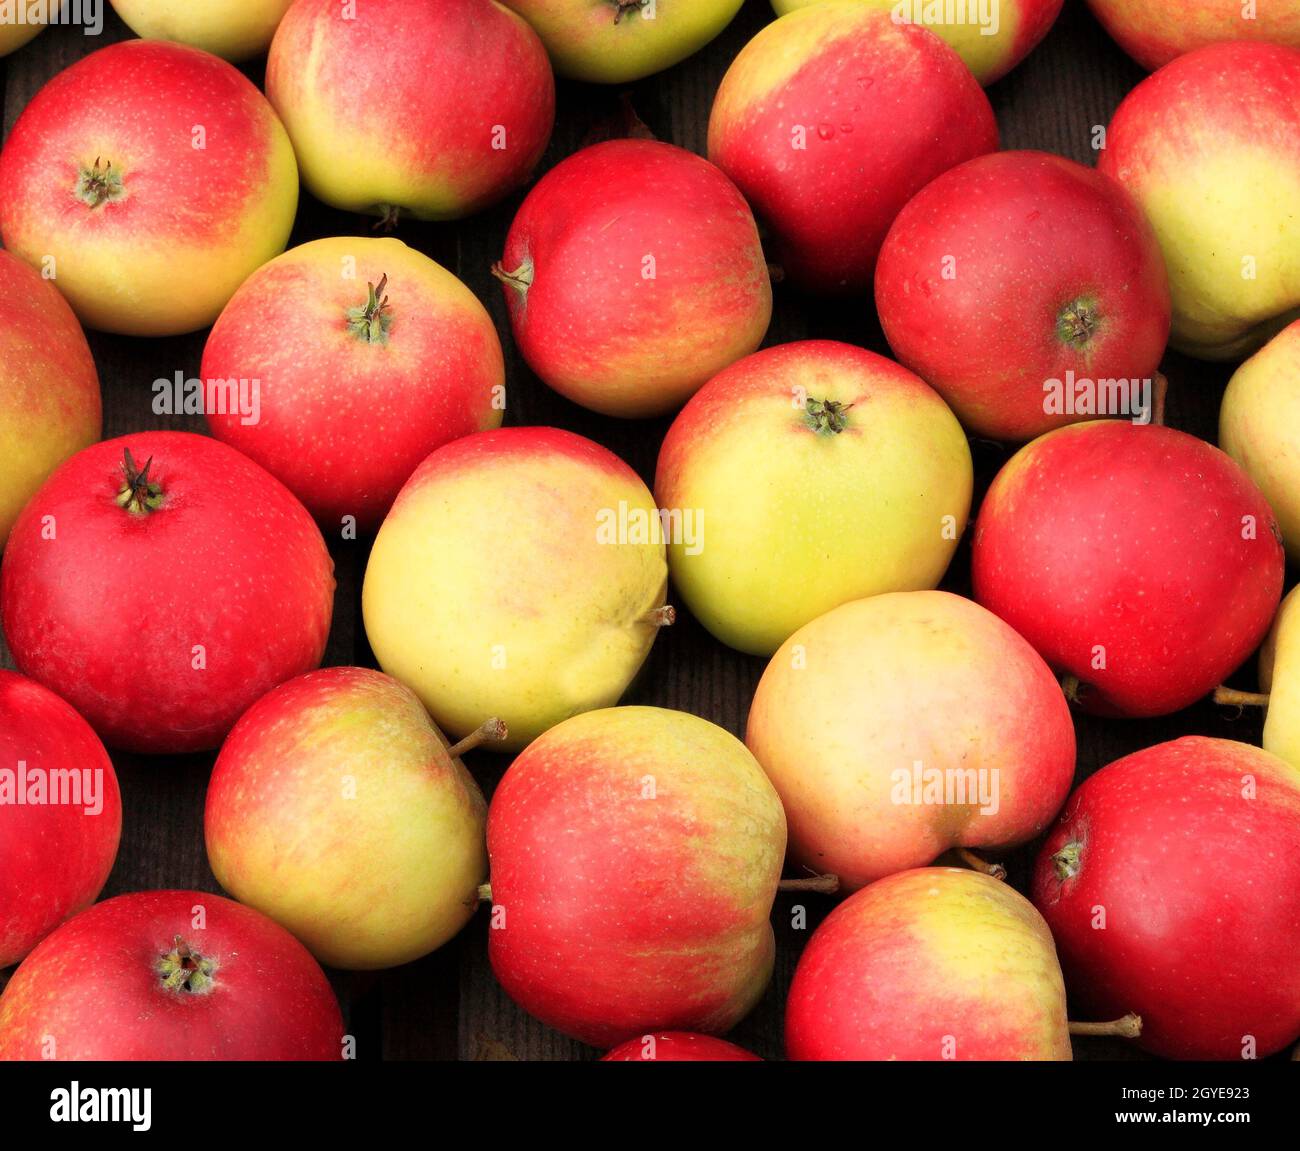 Apfel 'Worcester', Farm Shop Display, Obst, Äpfel, gesunde Ernährung, malus domestica Stockfoto